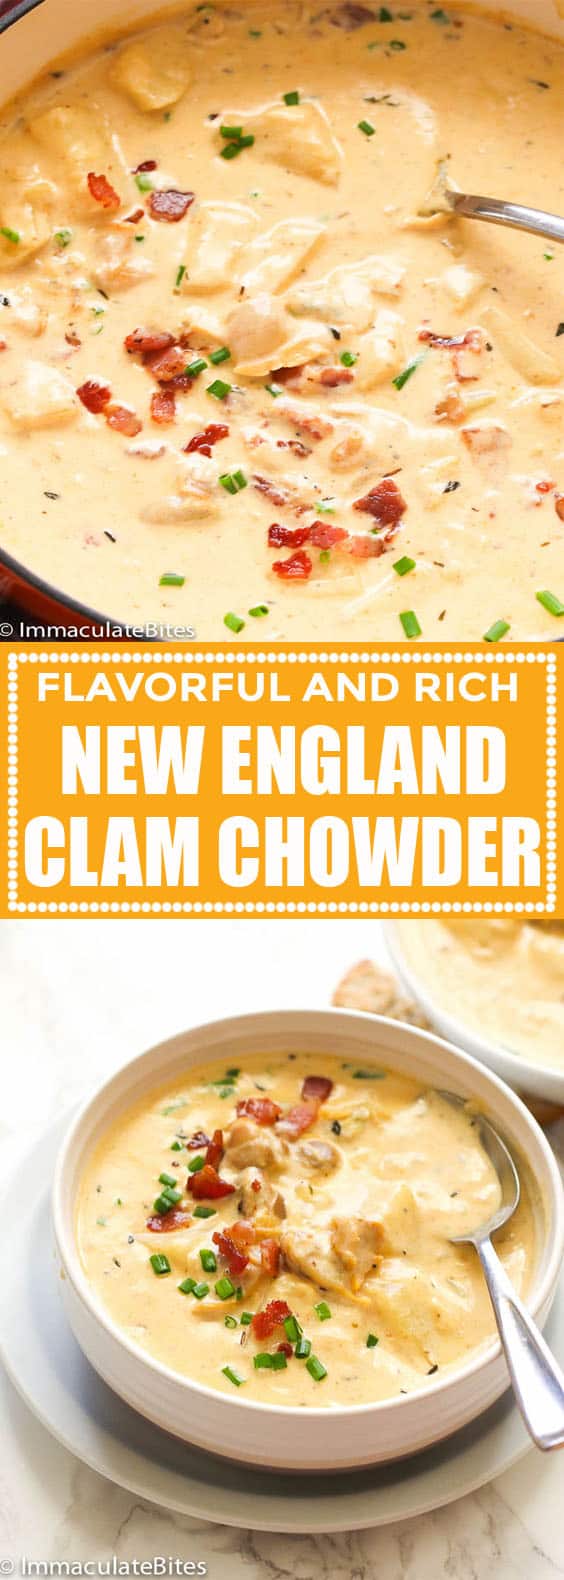 New England Clam Chowder - Emily Bites